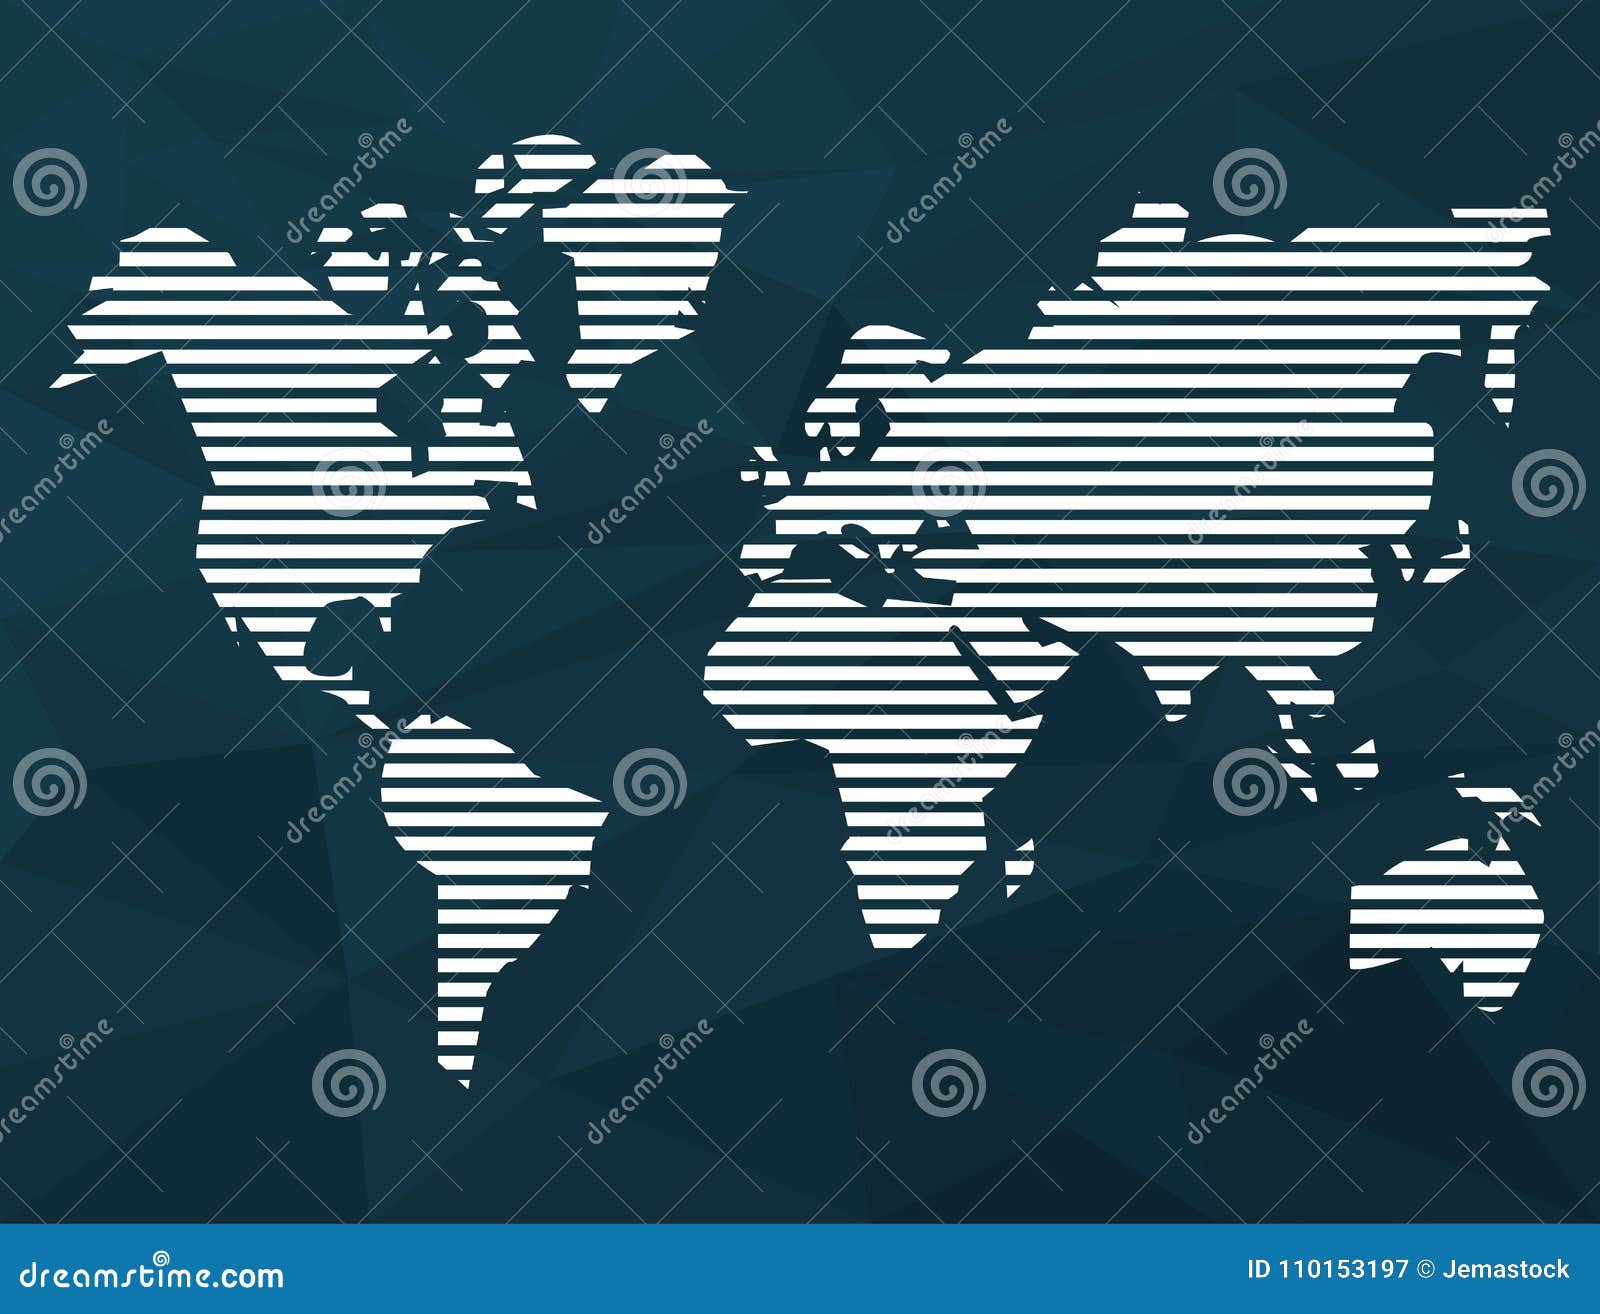 World Map Silhouette Stock Vector Illustration Of Element 110153197